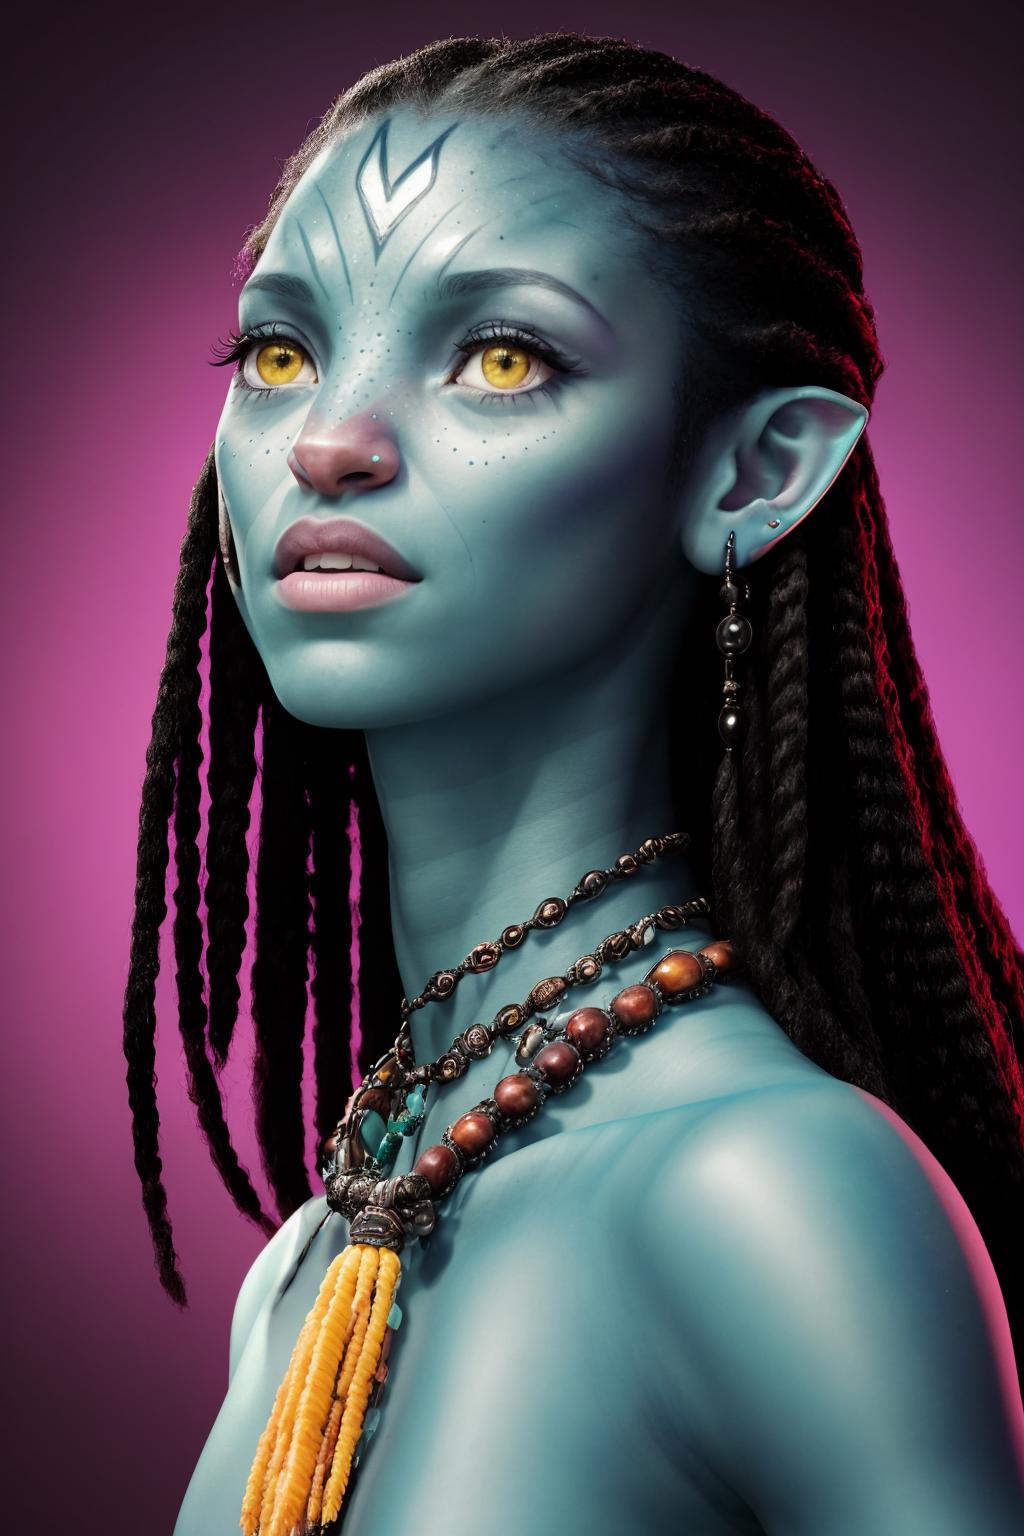 Avatar inspired collection pt. 2 💙: Neytiri necklace • • • • • •48.88$ |  Instagram